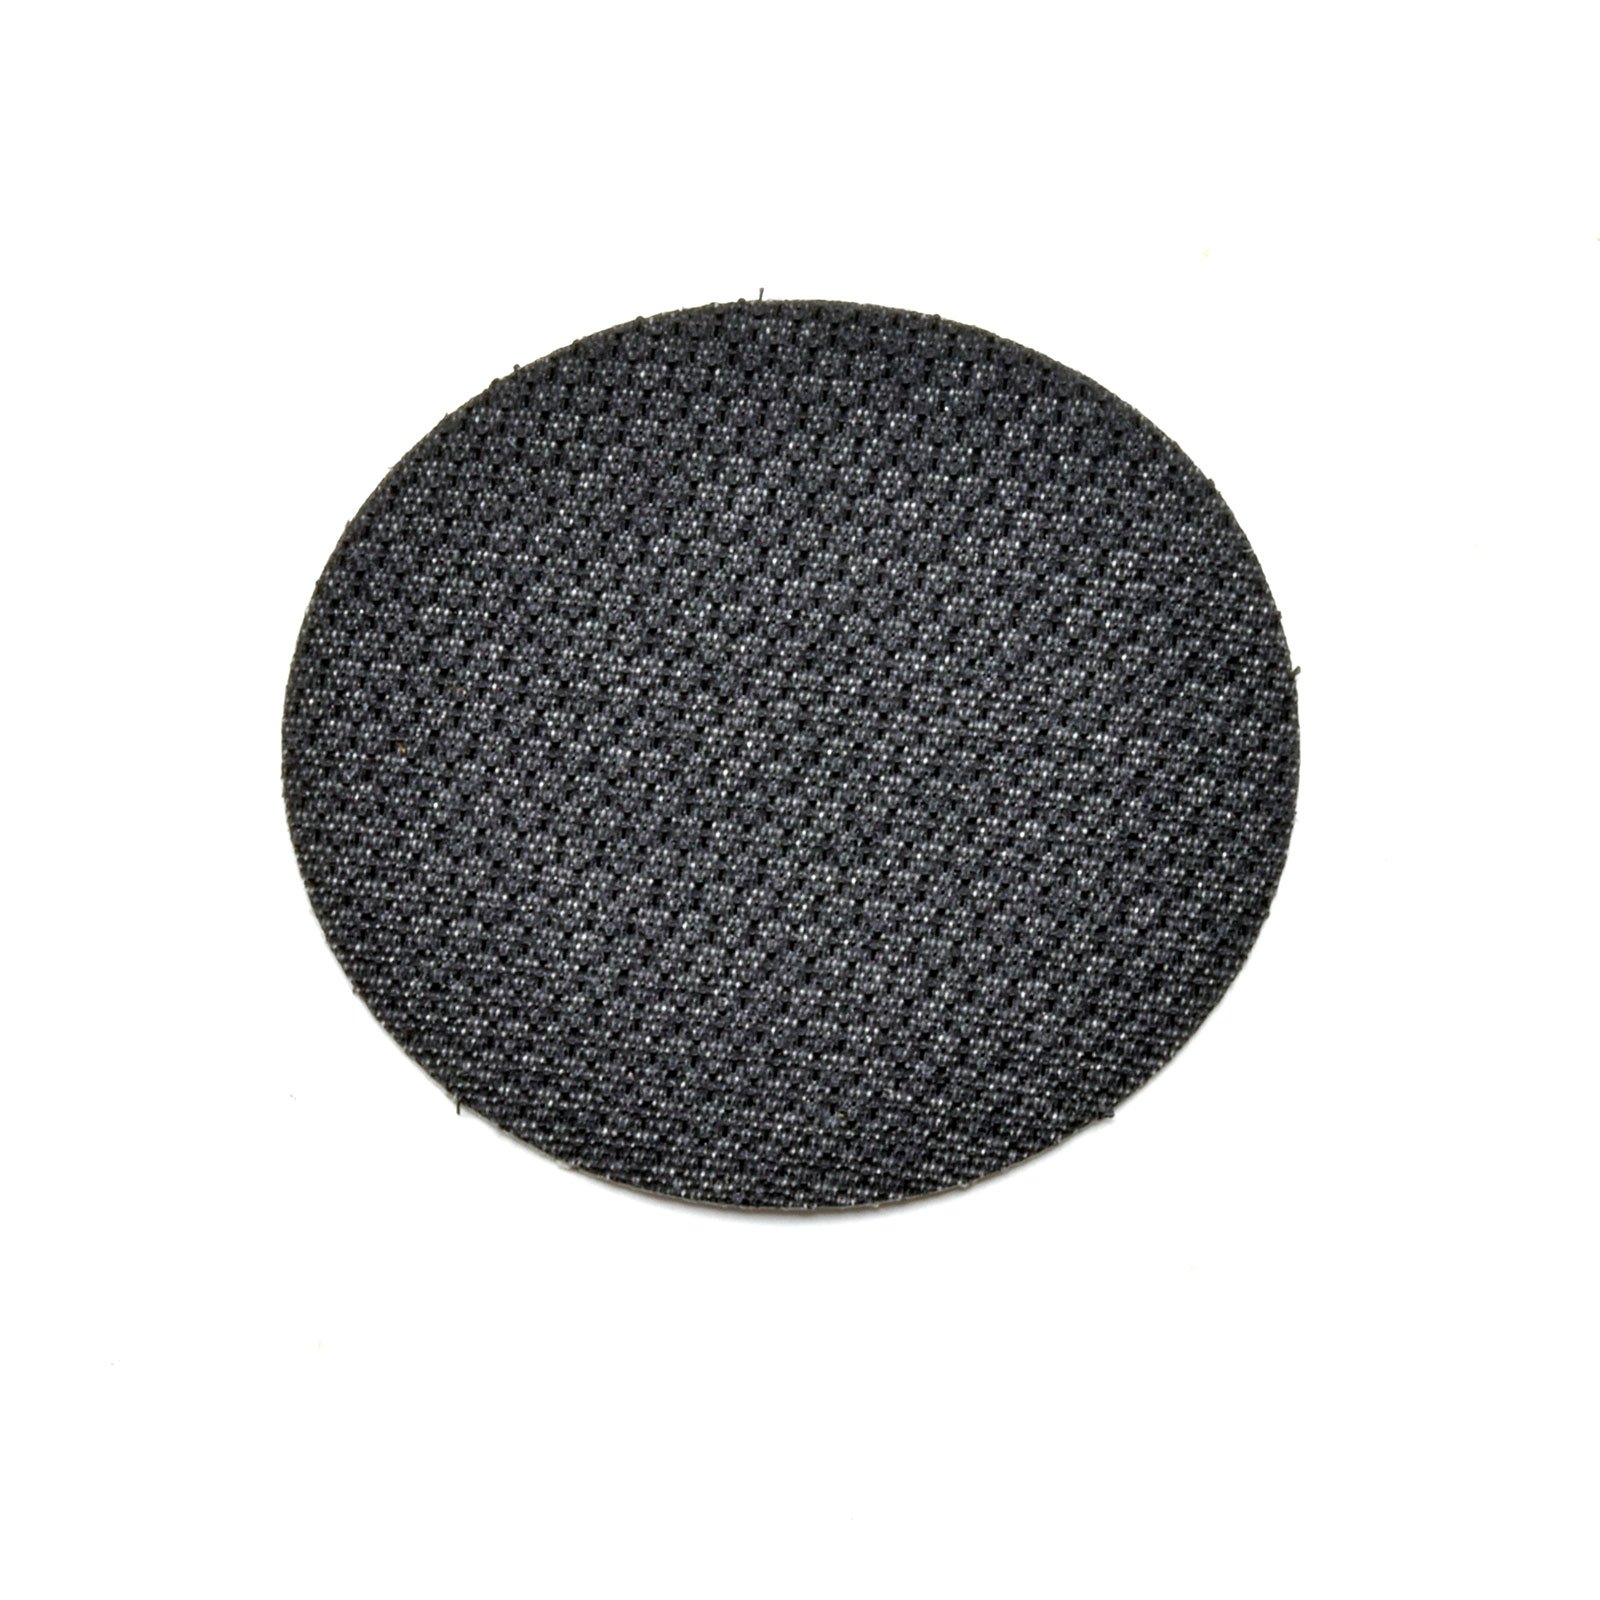 2-3/8” Velcro Hook Disk with PSA Ba